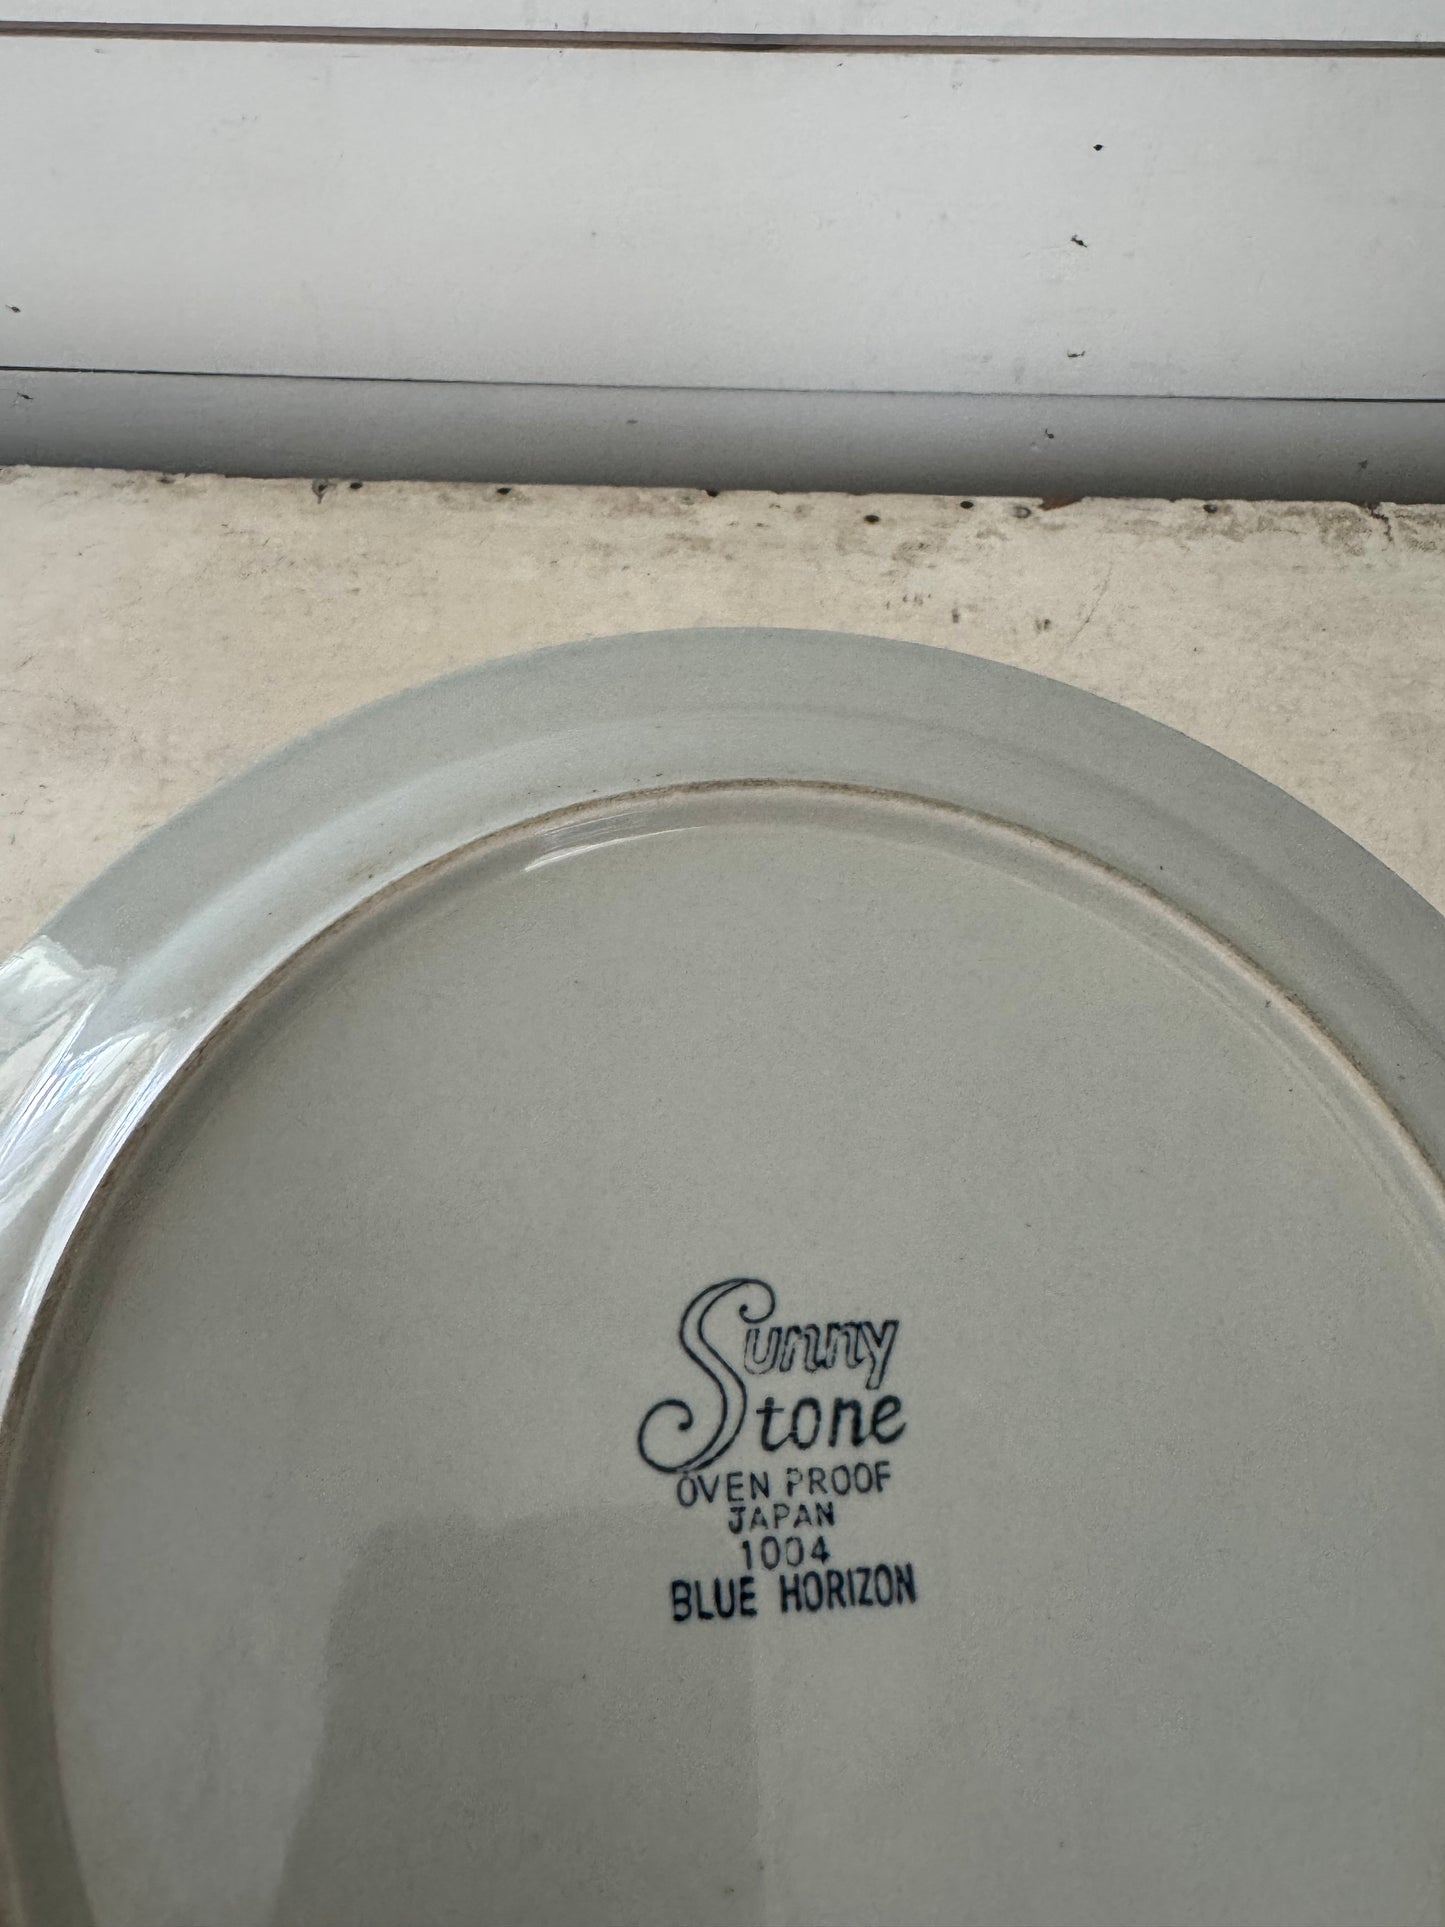 Vintage Sunny Stone Plate